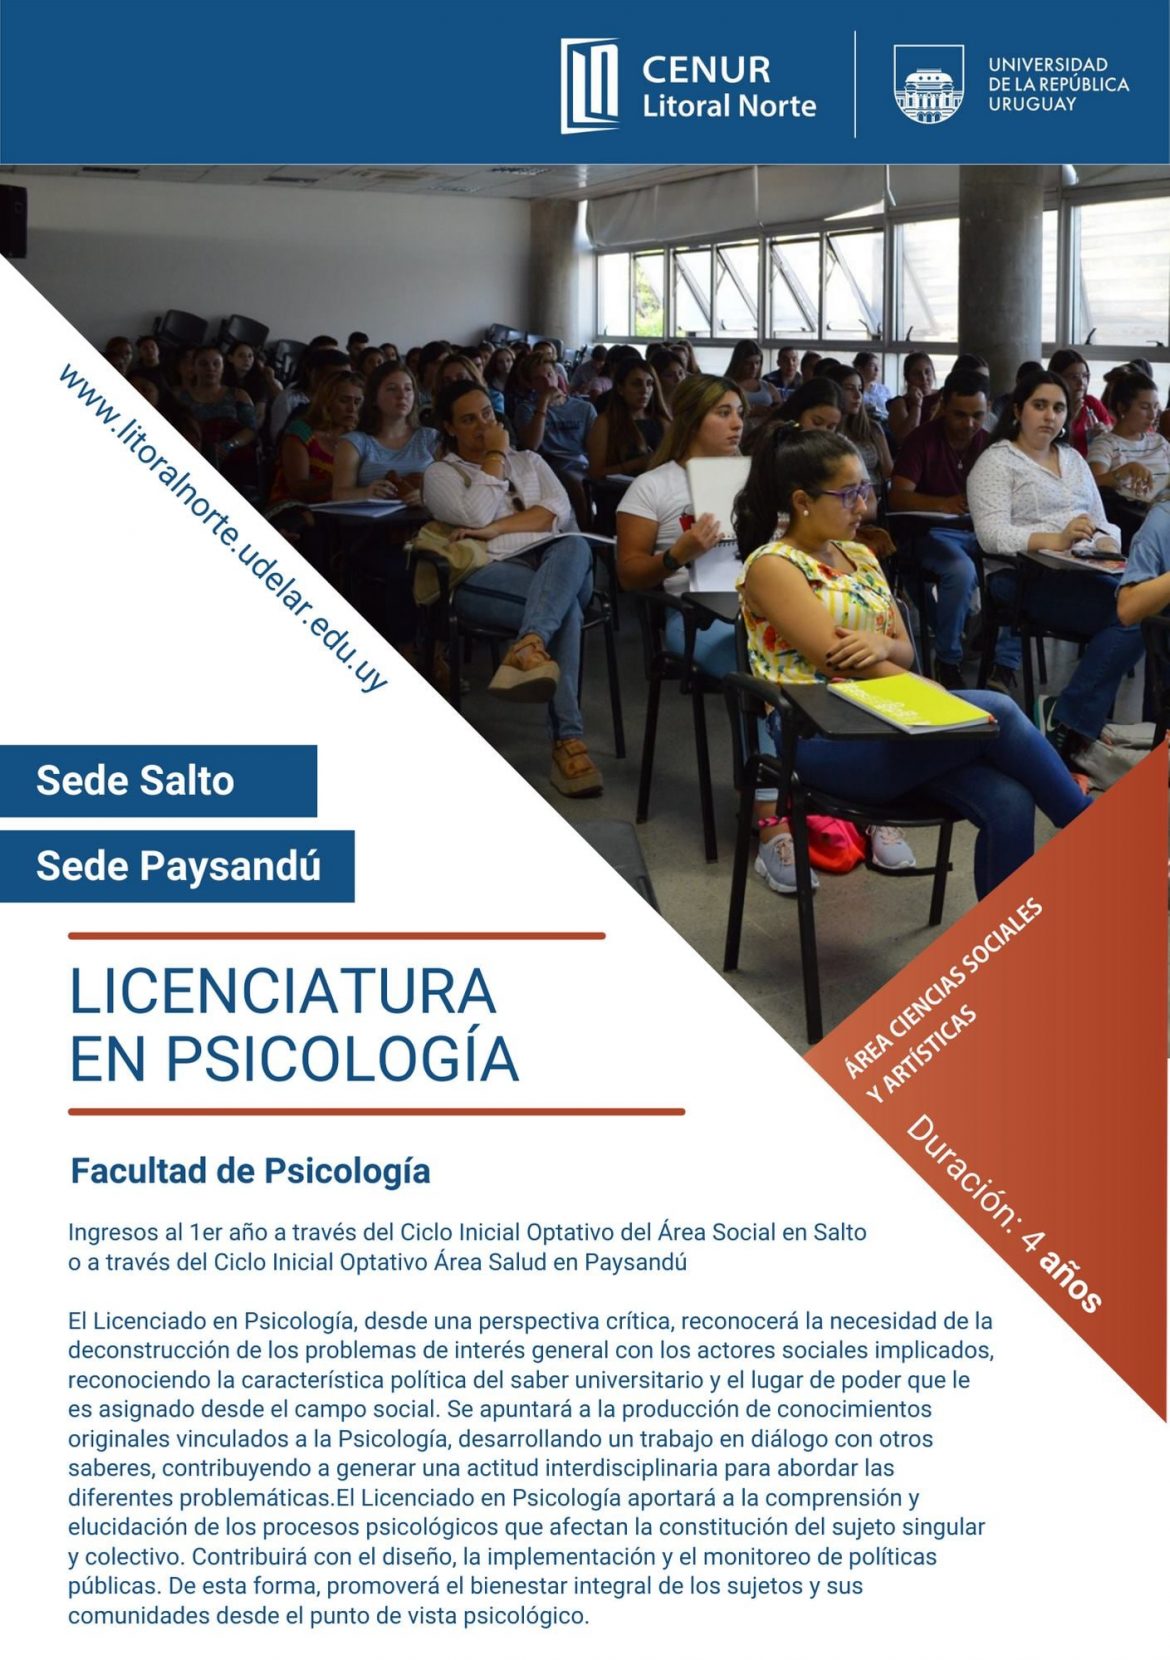 Cenur Litoral Norte sede Salto: Oferta Educativa